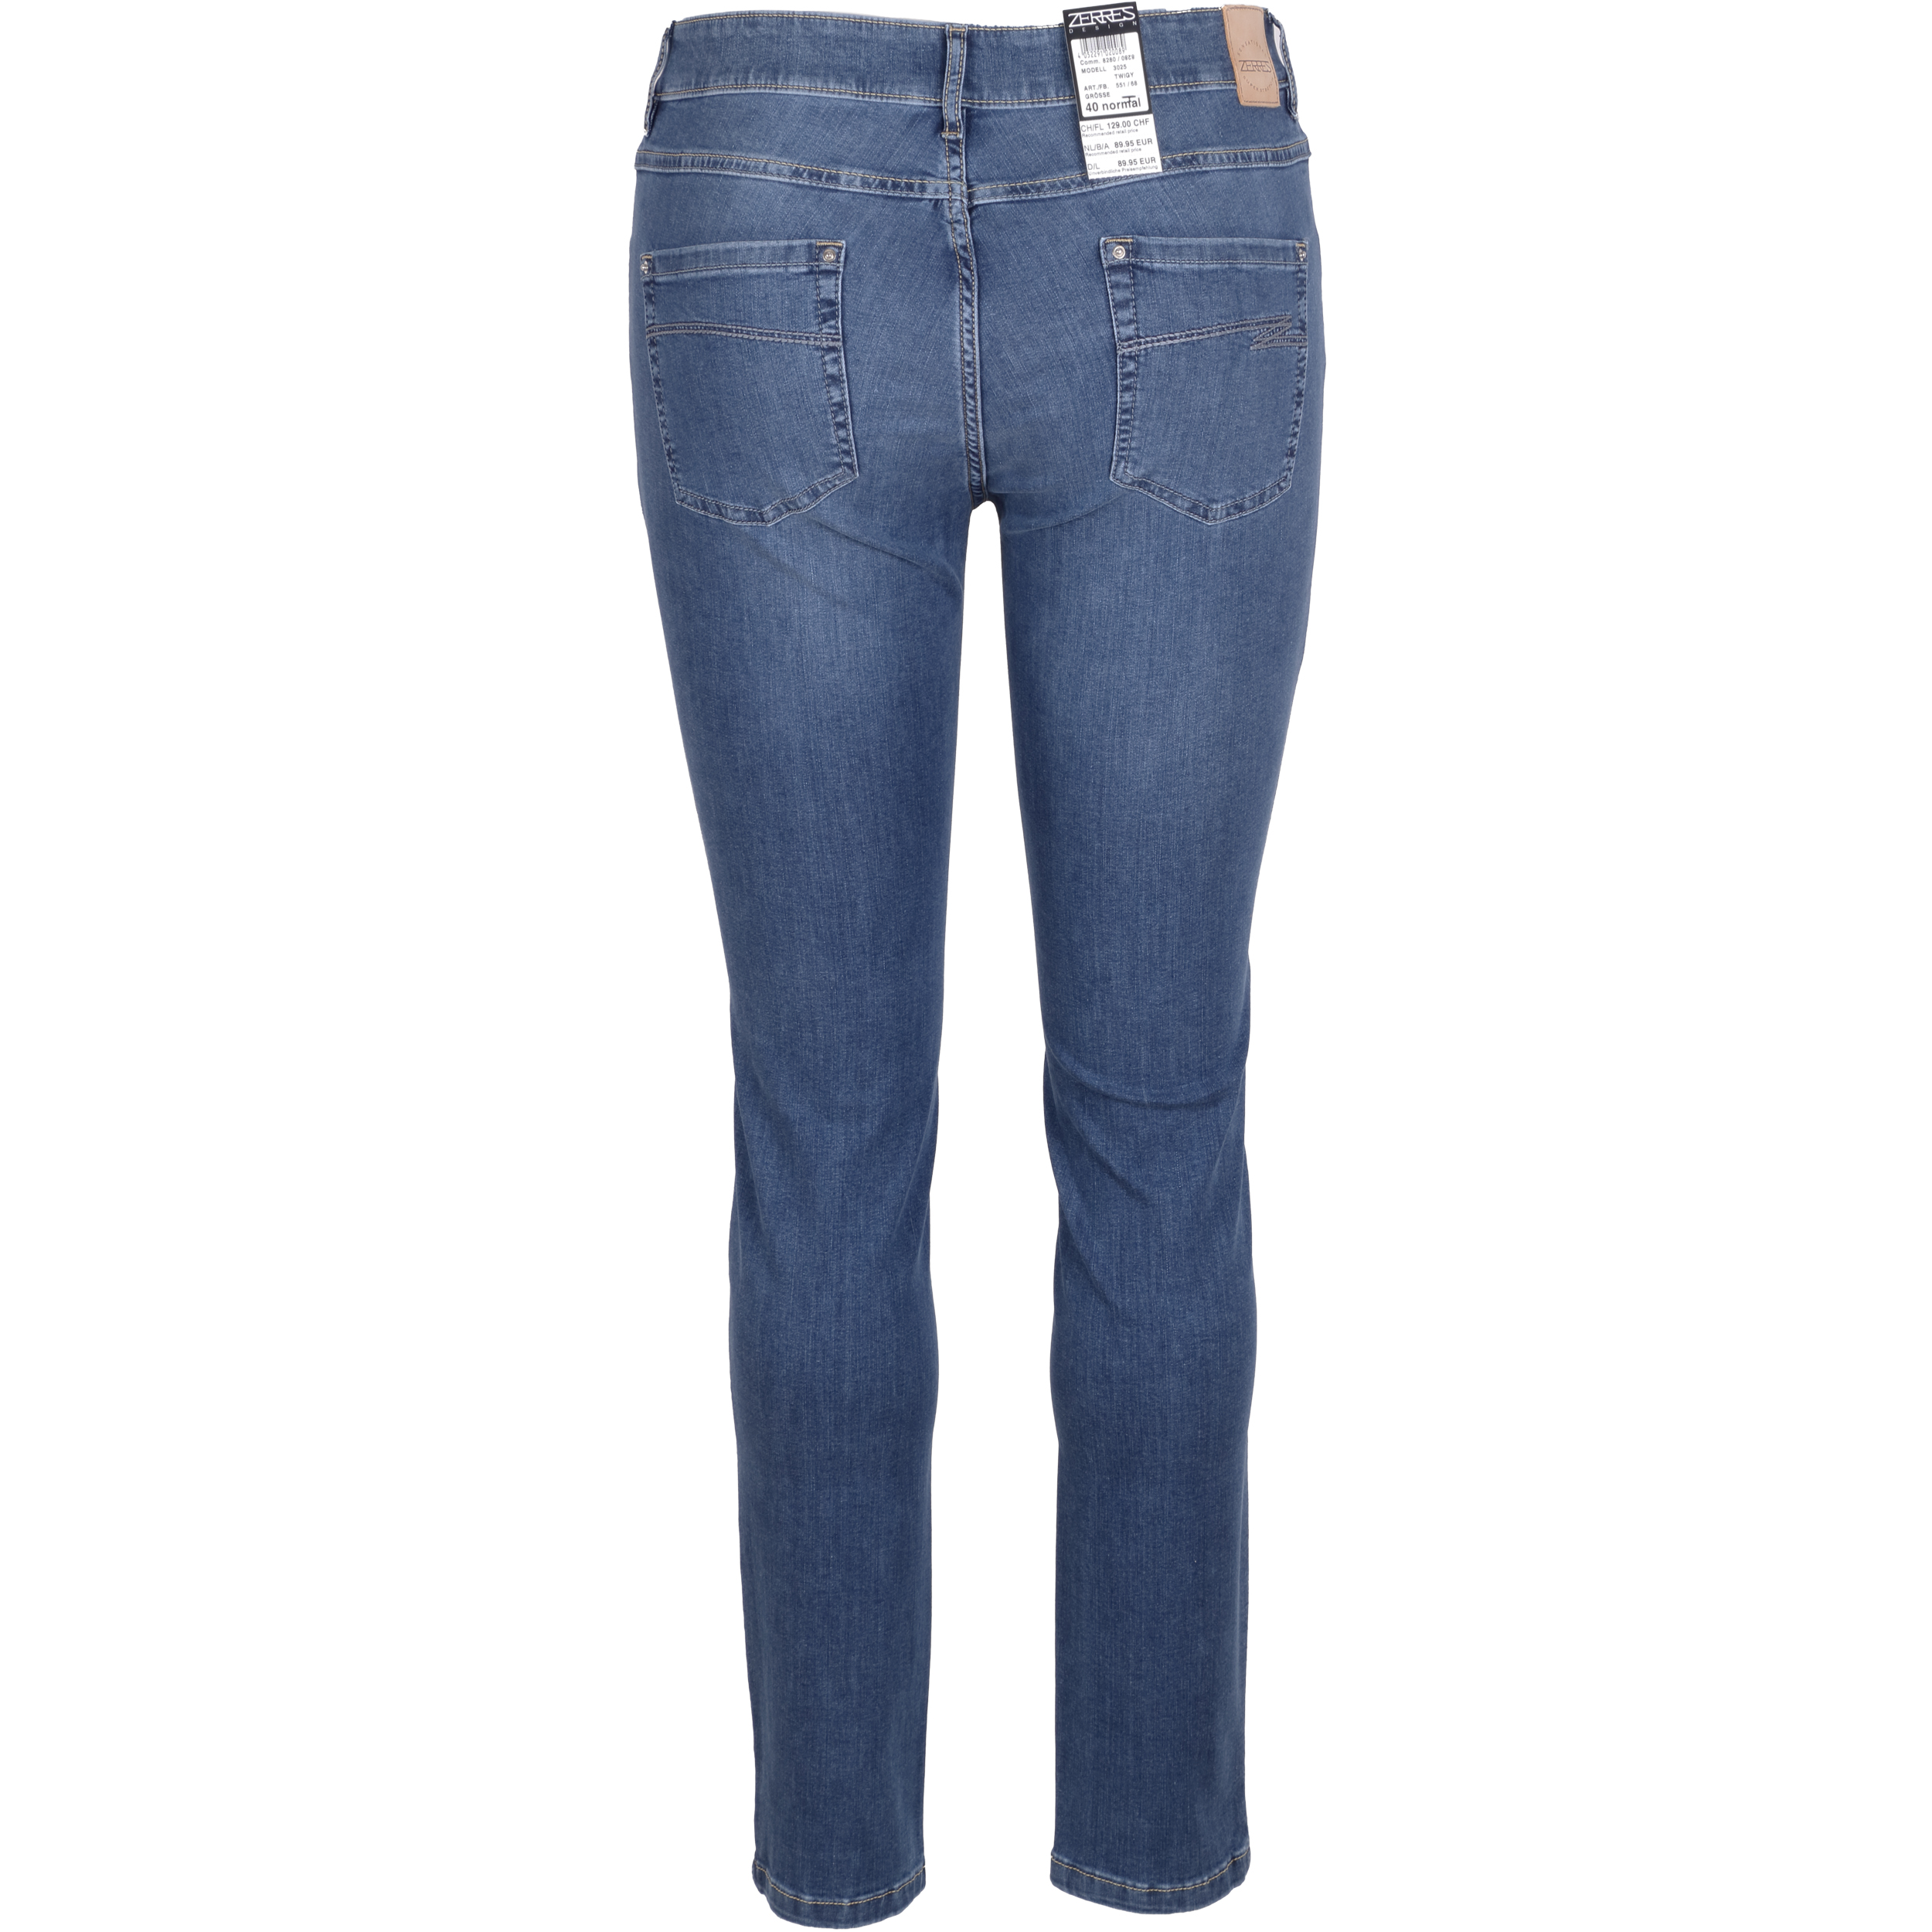 Zerres Damen Jeans Twigy Sensational  42 blau